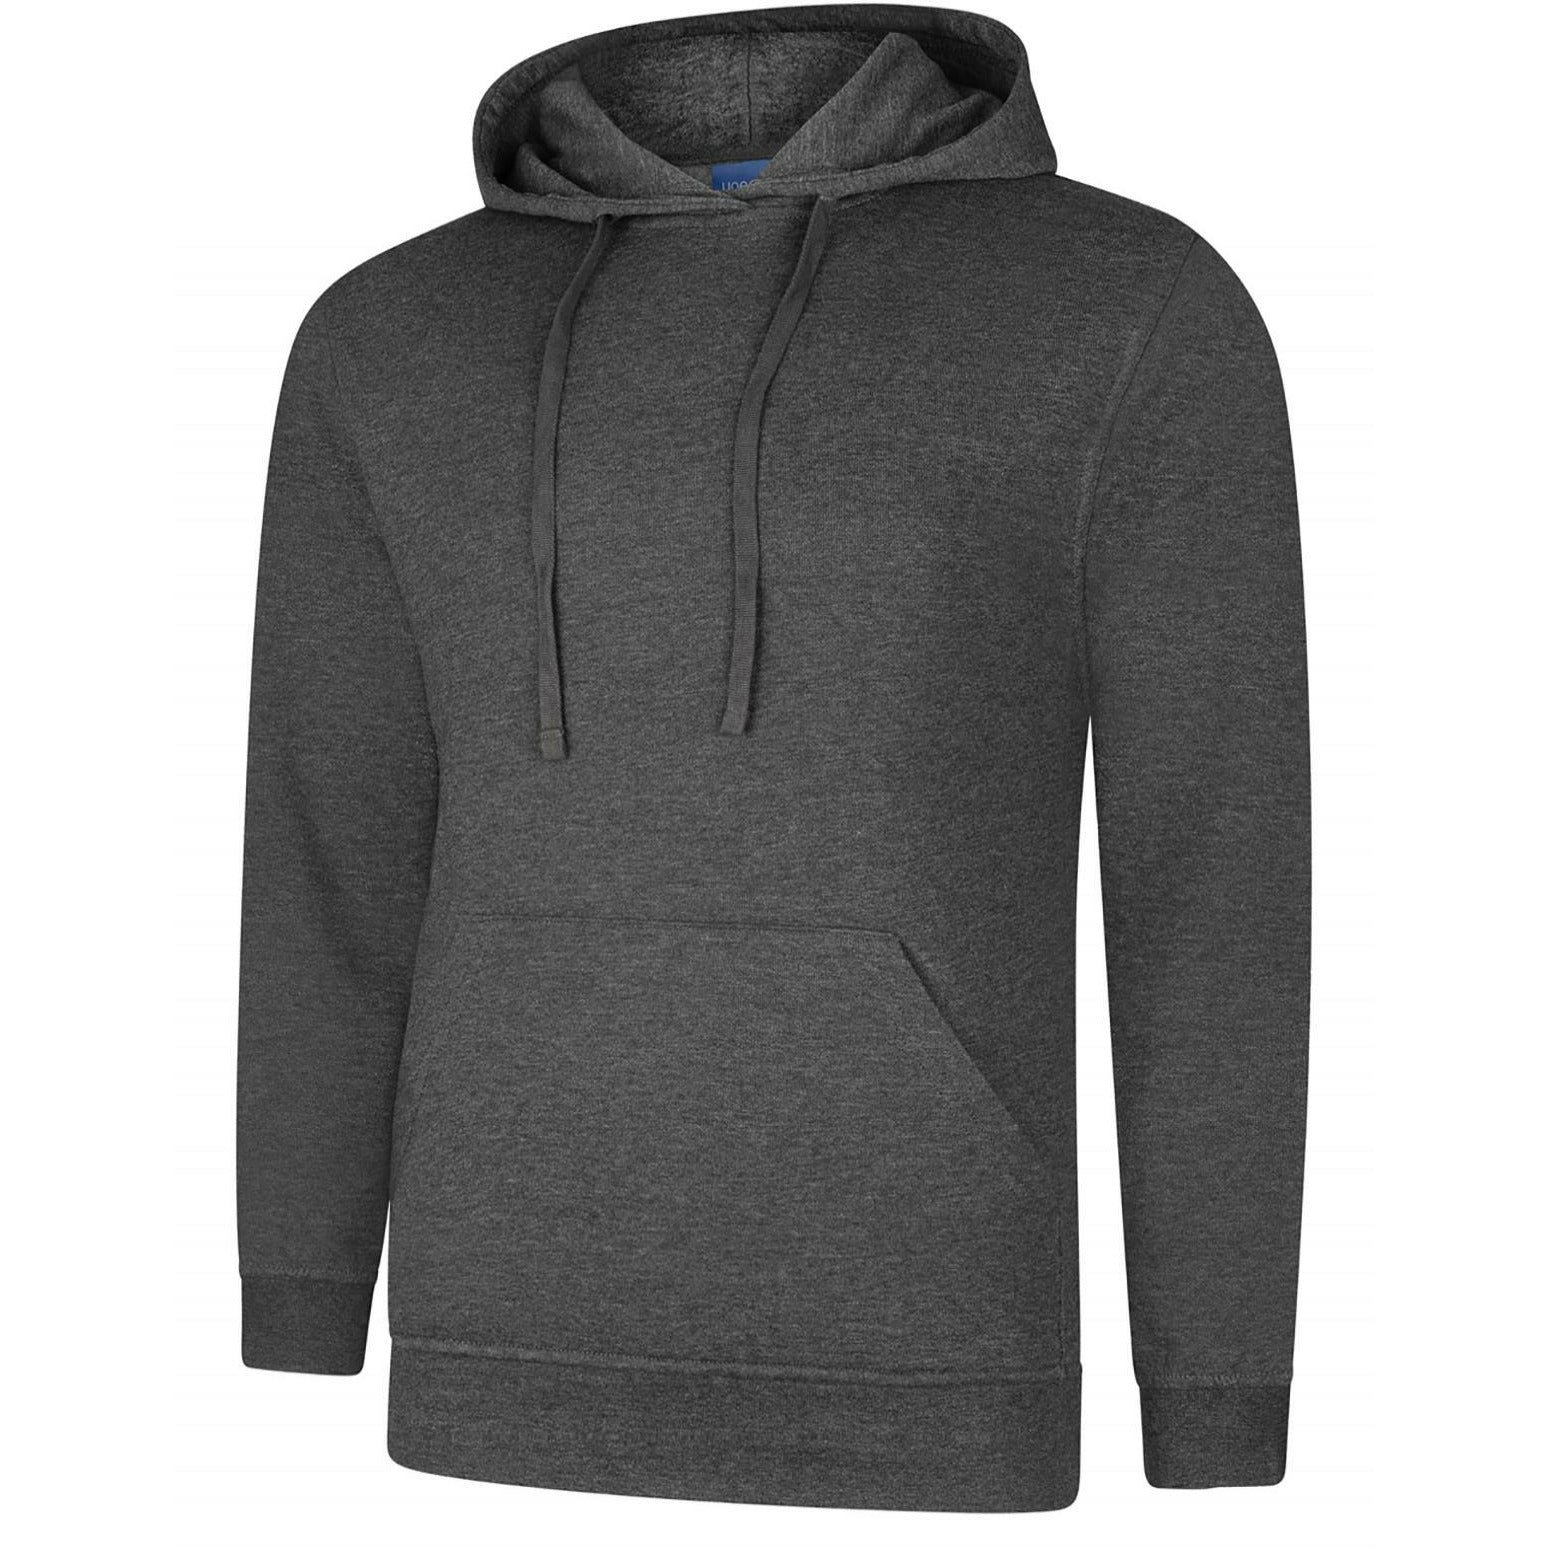 Deluxe Hooded Sweatshirt (L - 2XL) Charcoal Grey